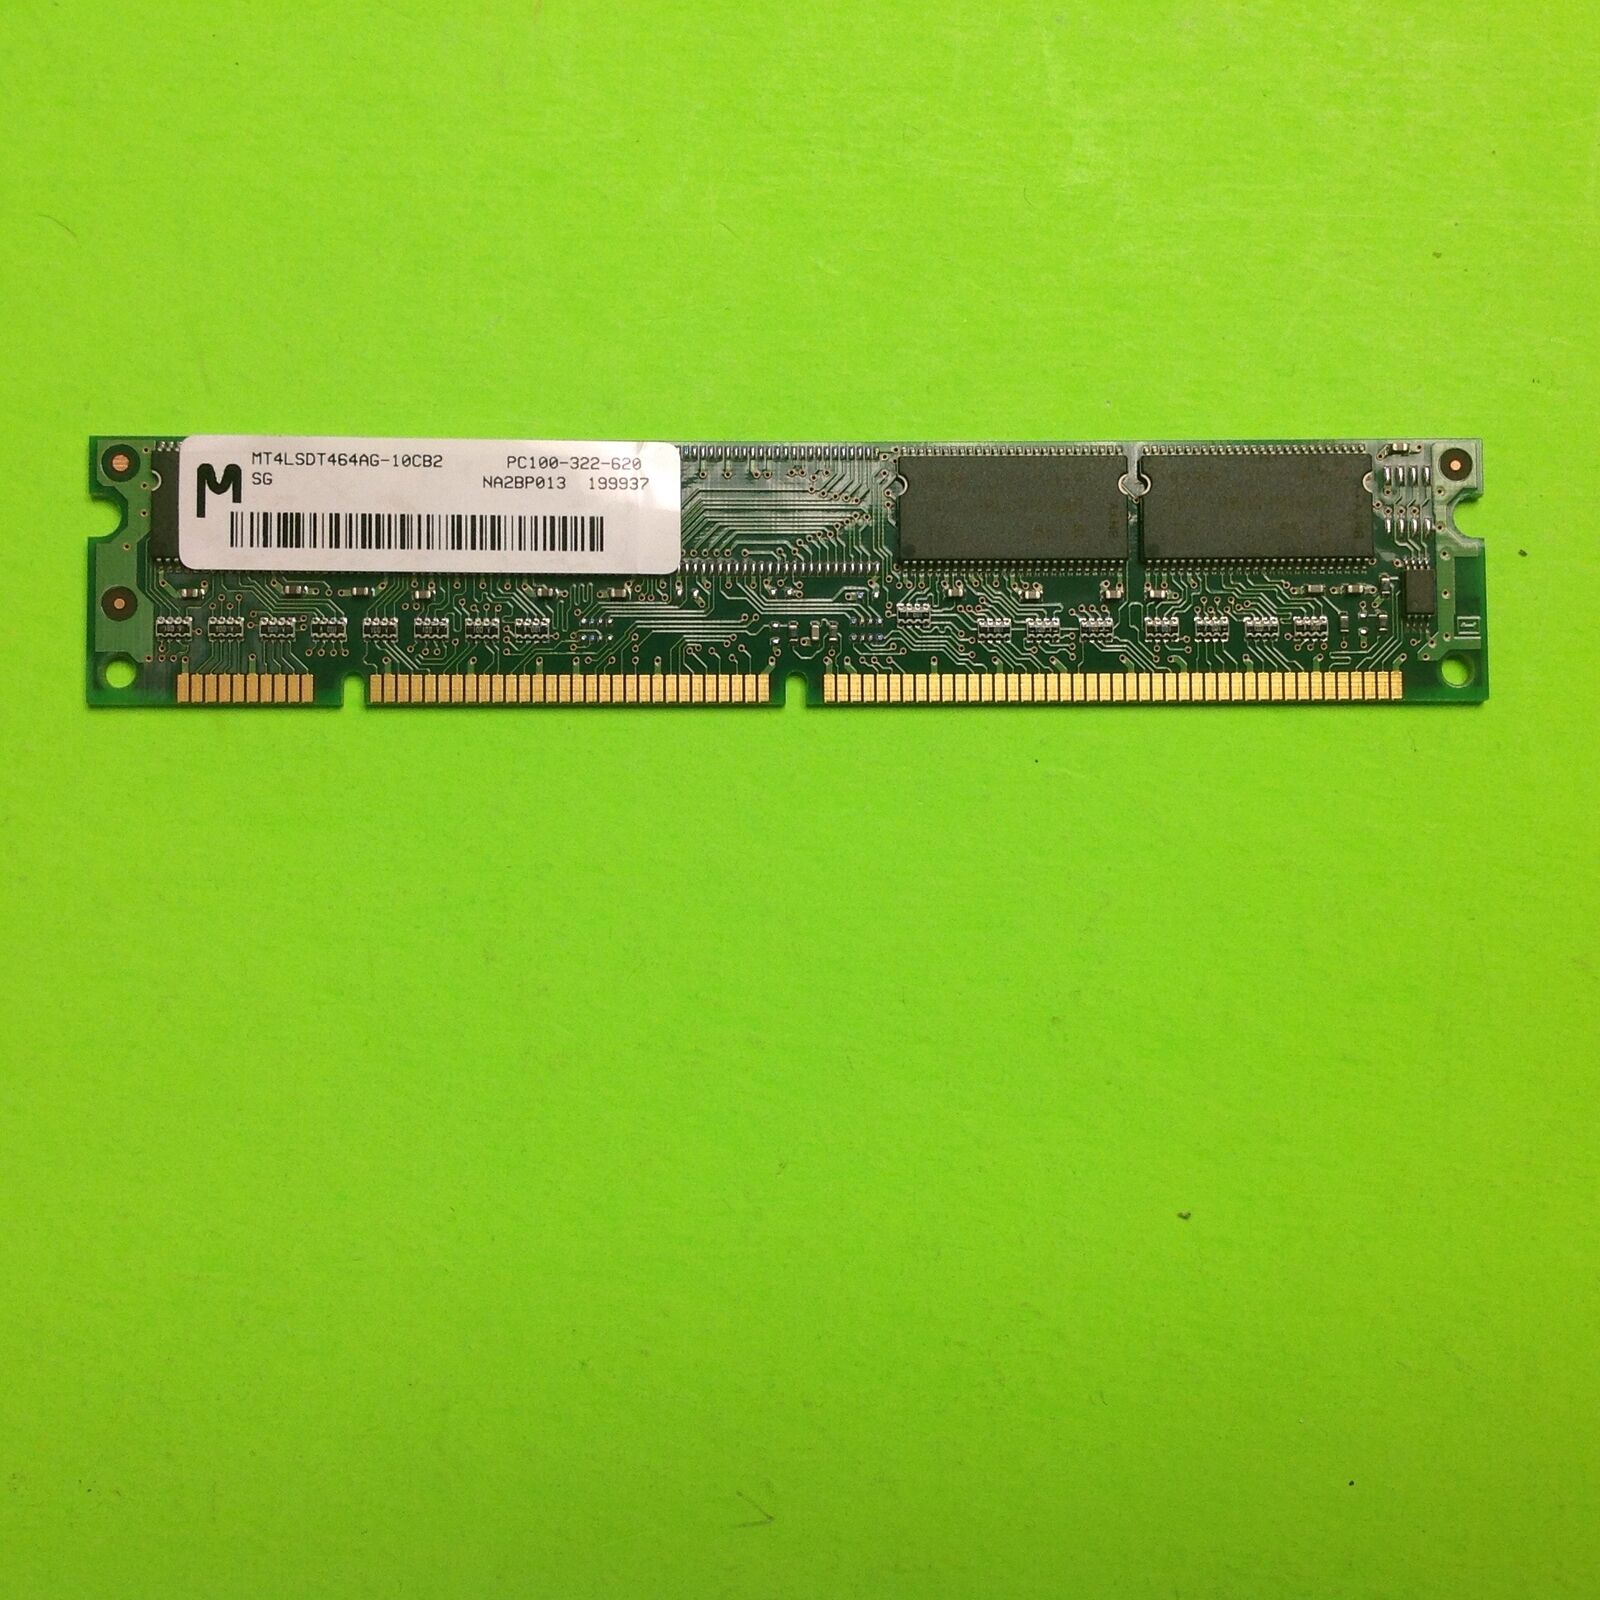 Micron MT4LSDT464AG-10CB2 SDR PC-100 Random Access Memory RAM